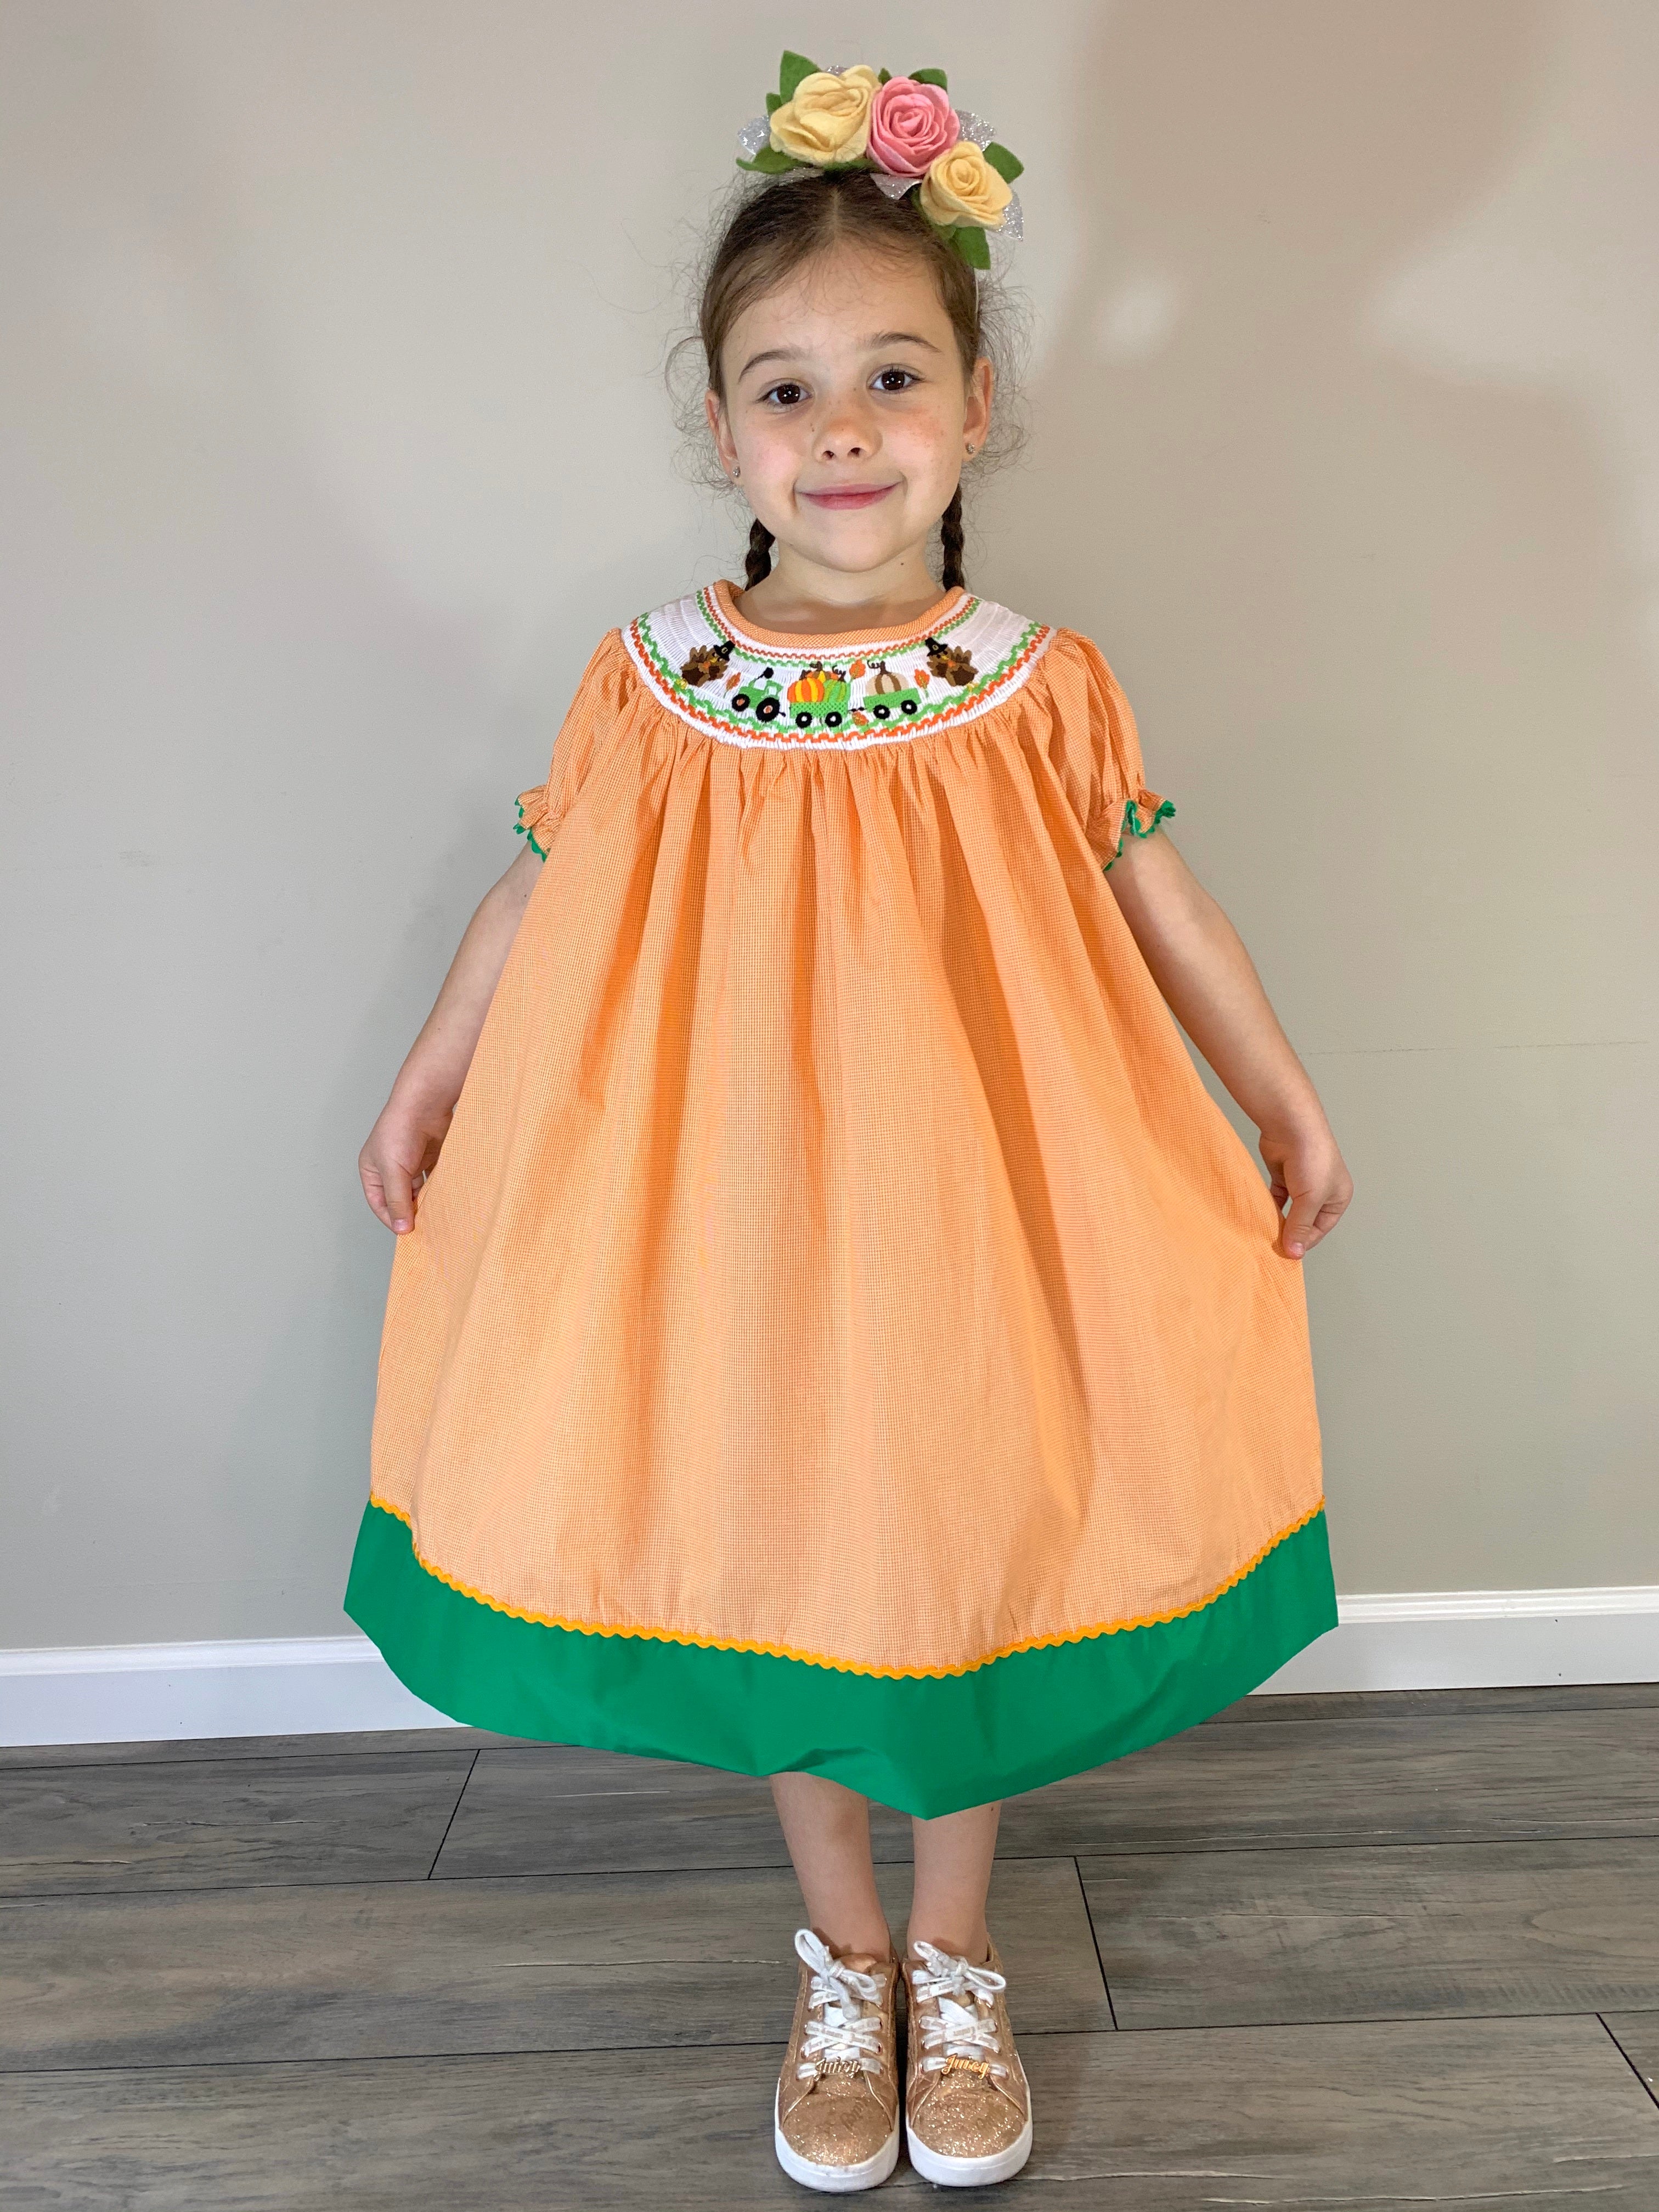 Baby Toddler Little Girl Thankskgiving Turkey & Pumpkin Tractor Gingham Bishop Dress - Orange/Green - Angeline Kids